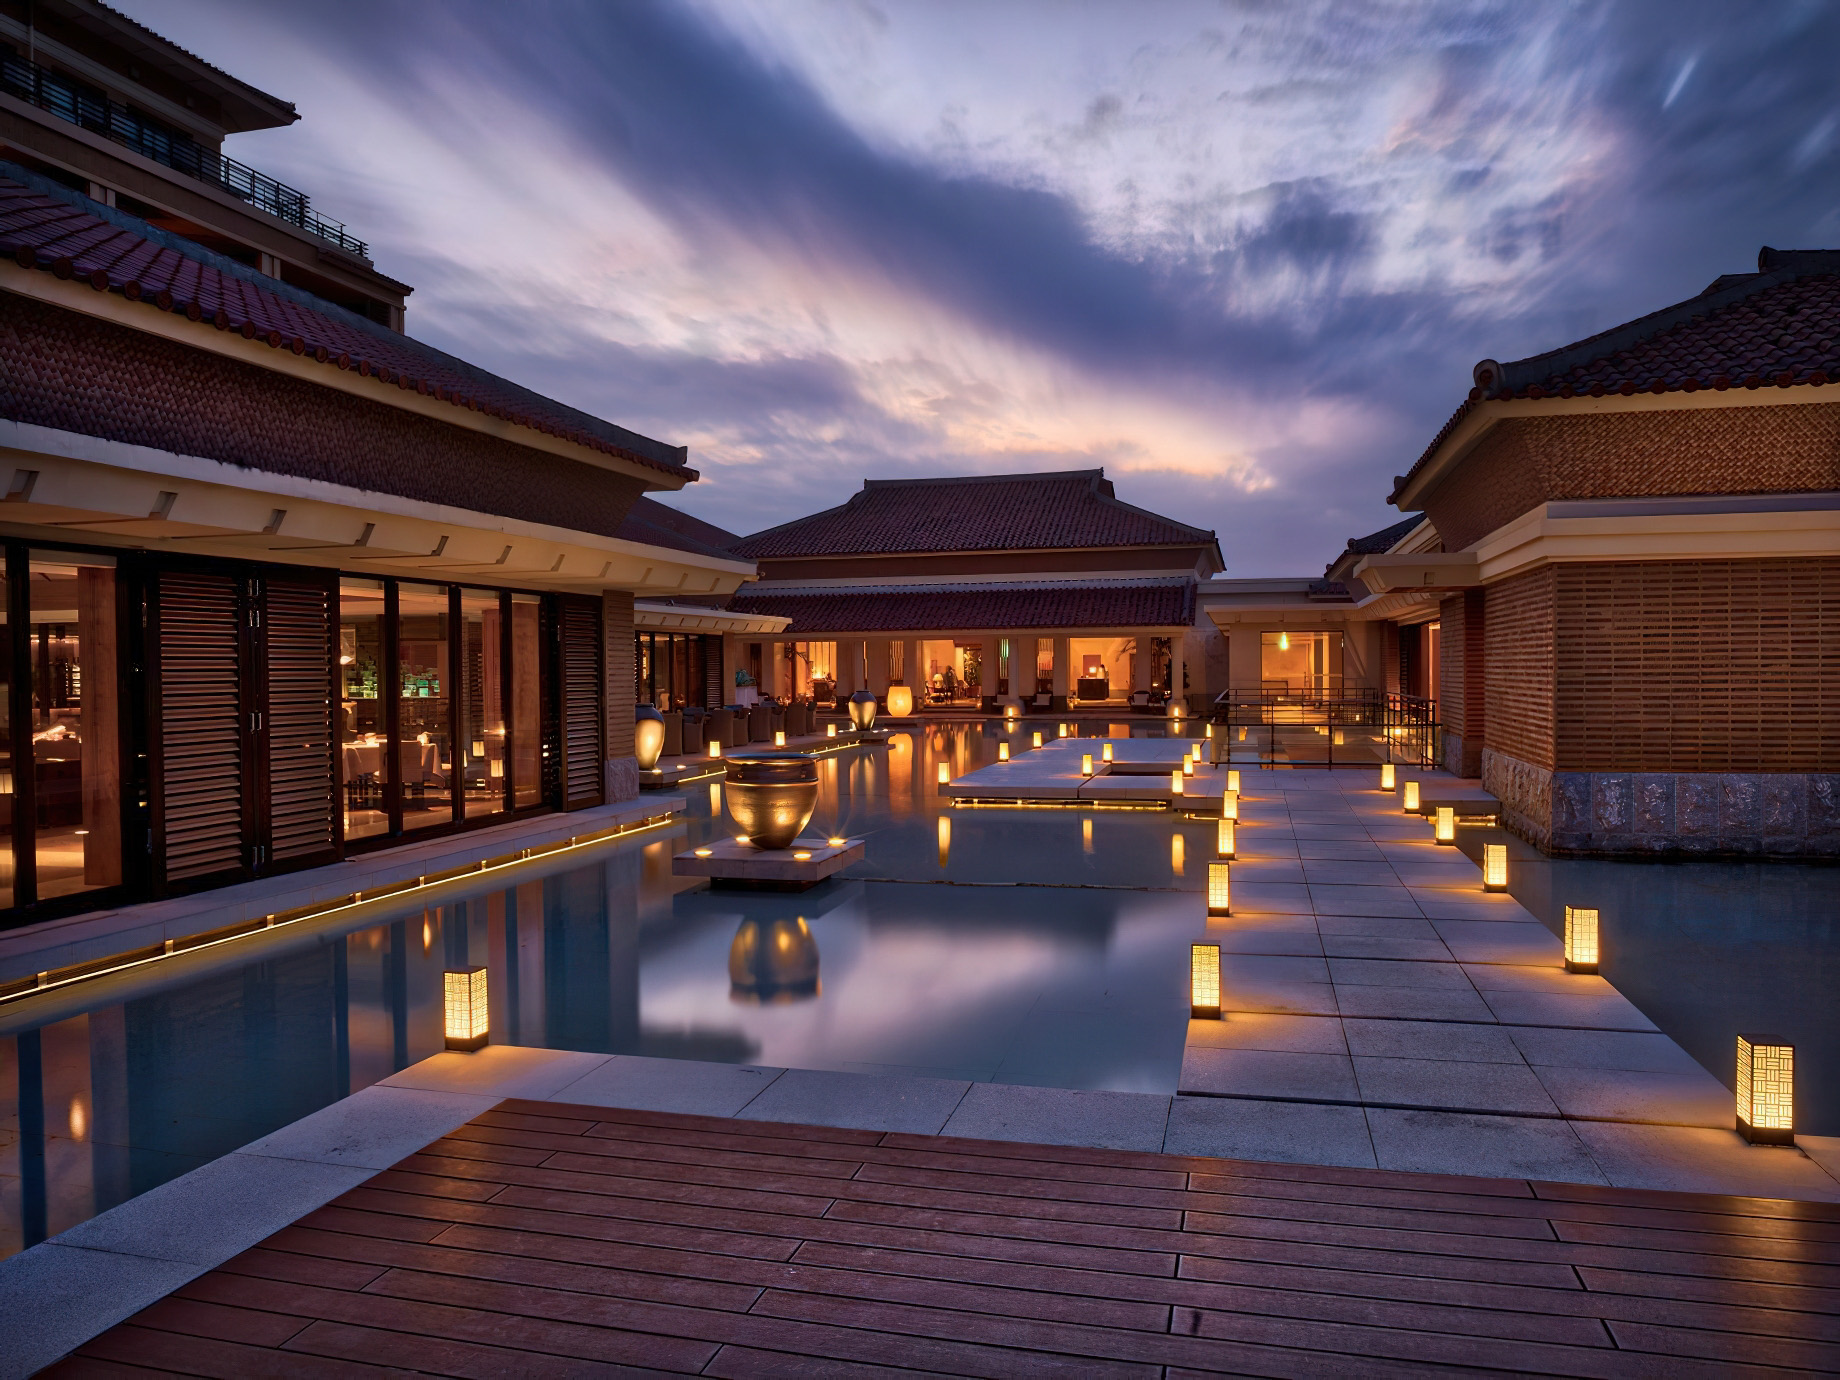 The Ritz-Carlton, Okinawa Hotel – Okinawa, Japan – Exterior Courtyard Sunset